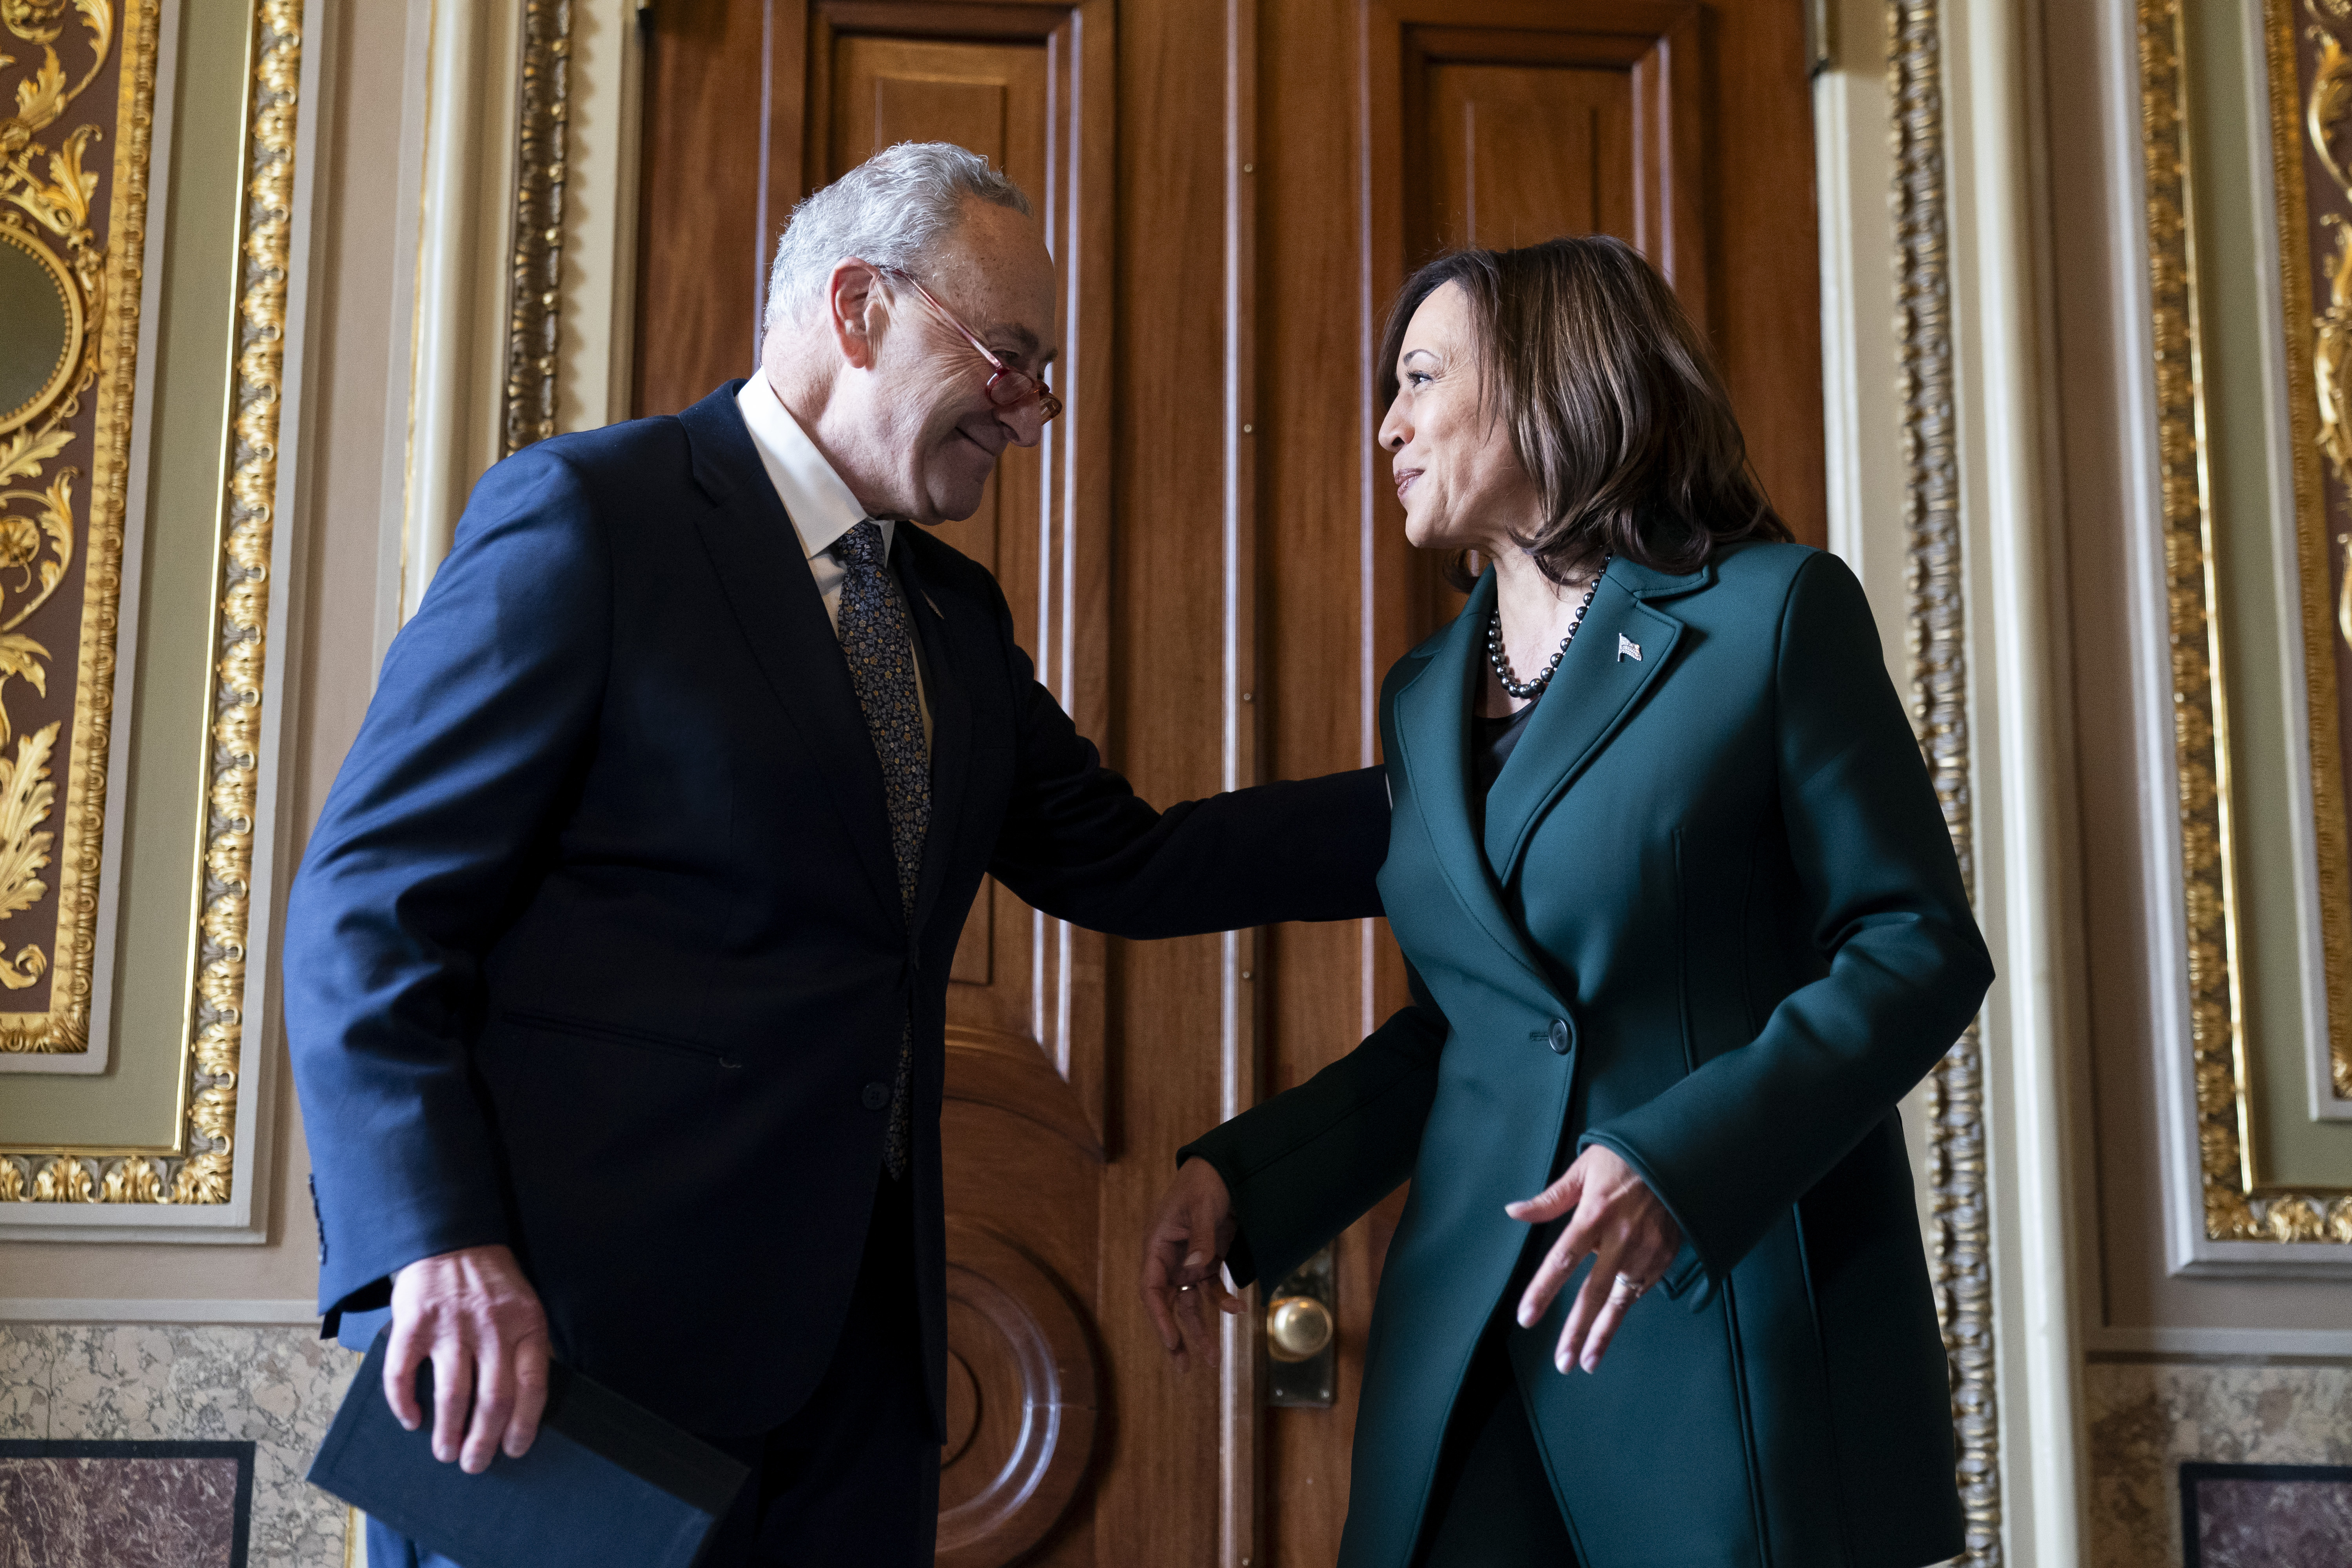 Divided Senate Gives Kamala Harris Powerful Tiebreaker Role - Bloomberg